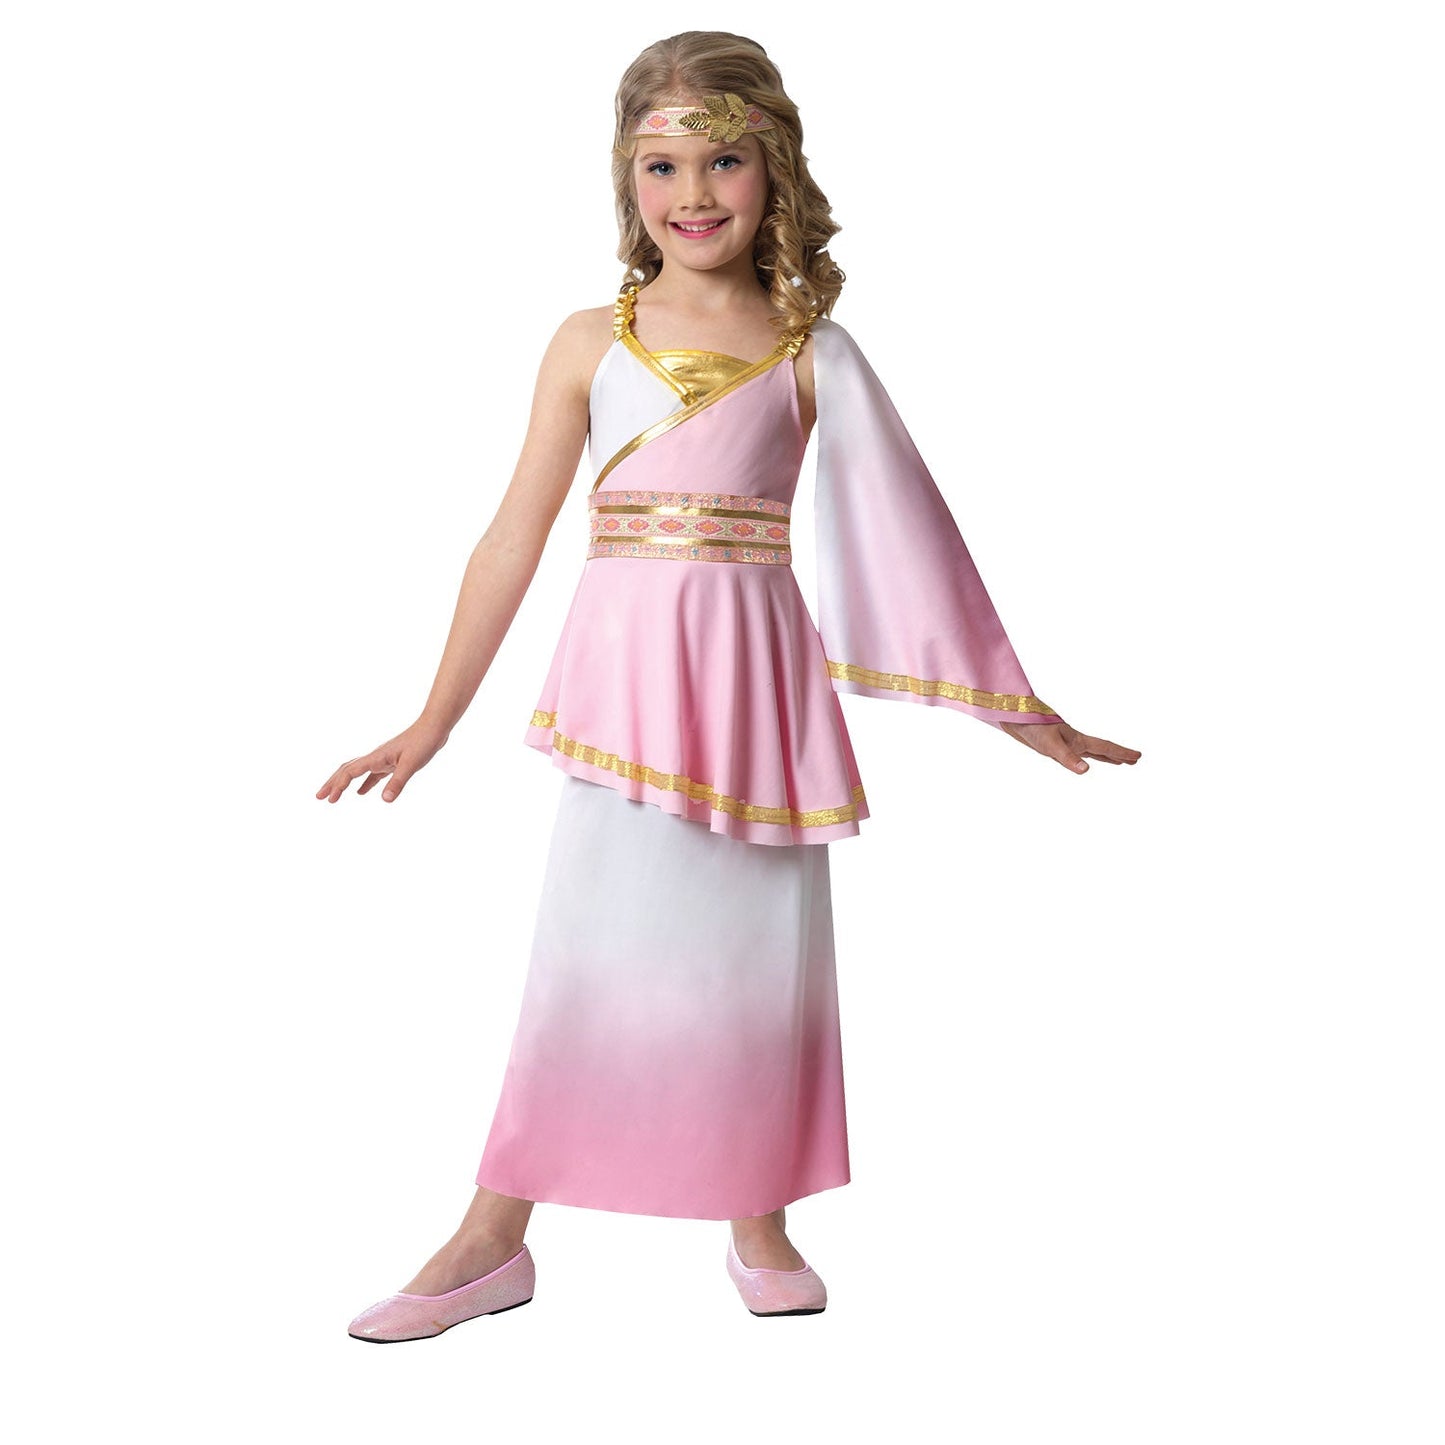 Girls Roman Goddess Costume includes dress and headband